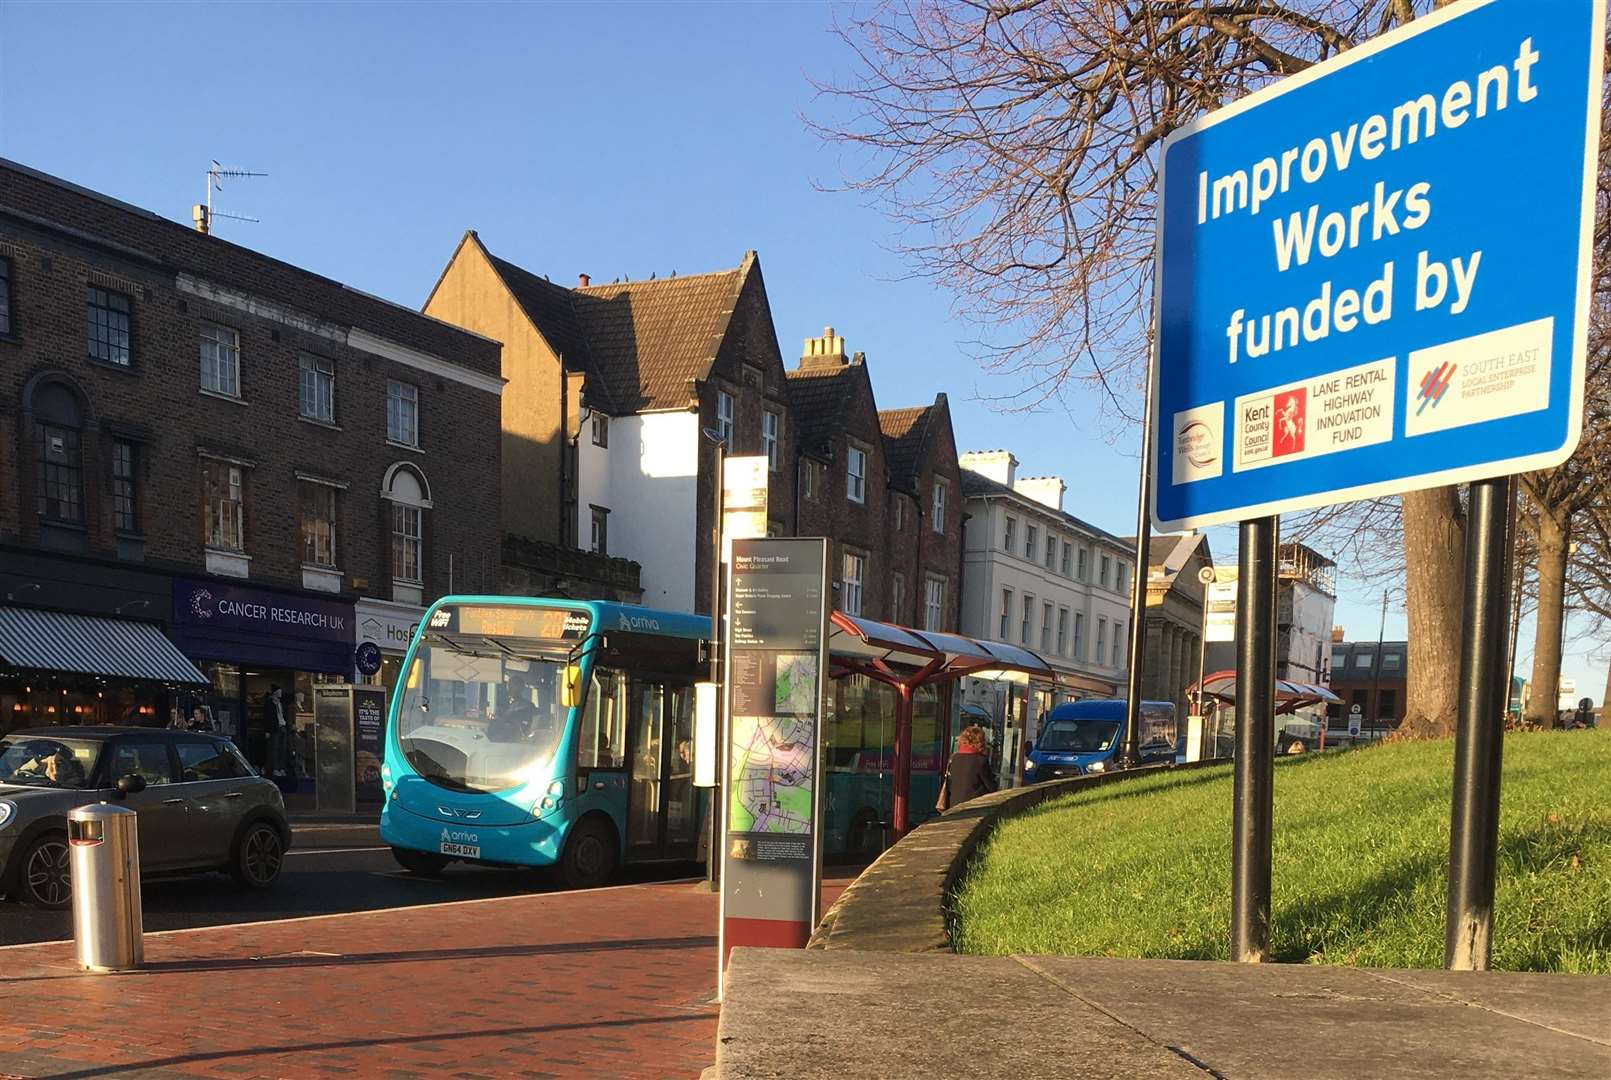 The bus lane in Mount Pleasant Road, Tunbridge Wells